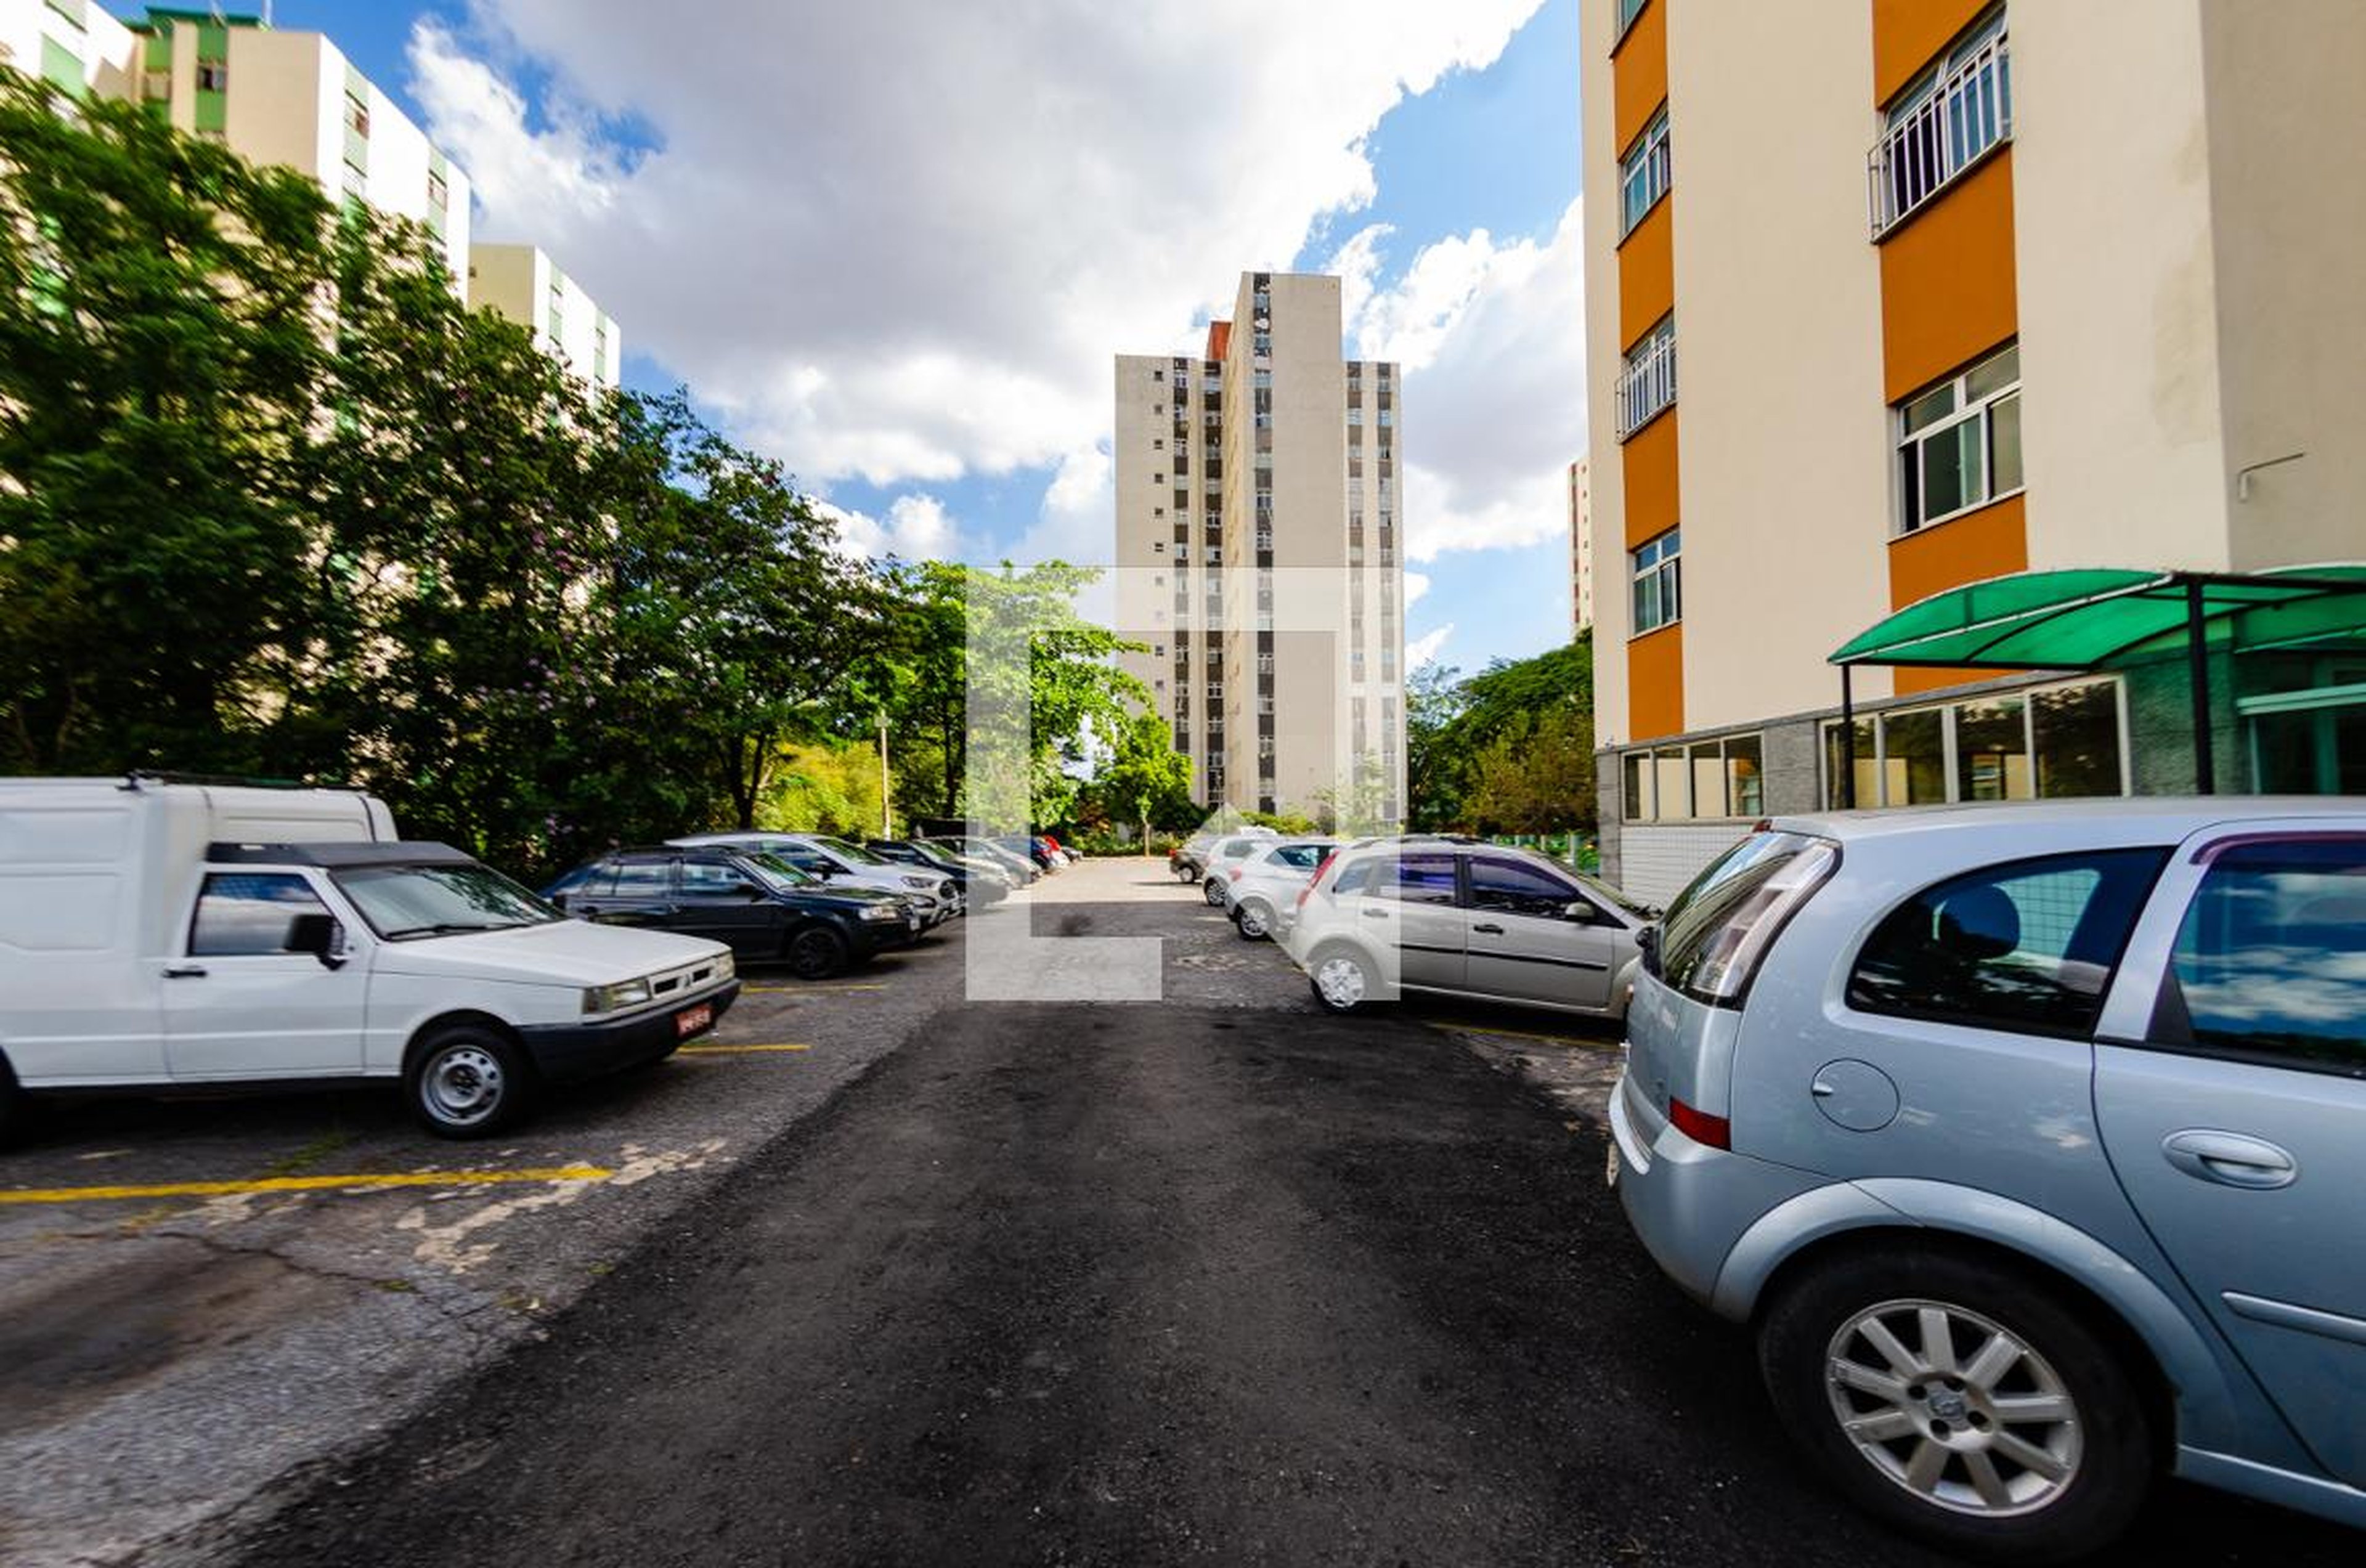 Estacionamento - Henrique Silva Araujo